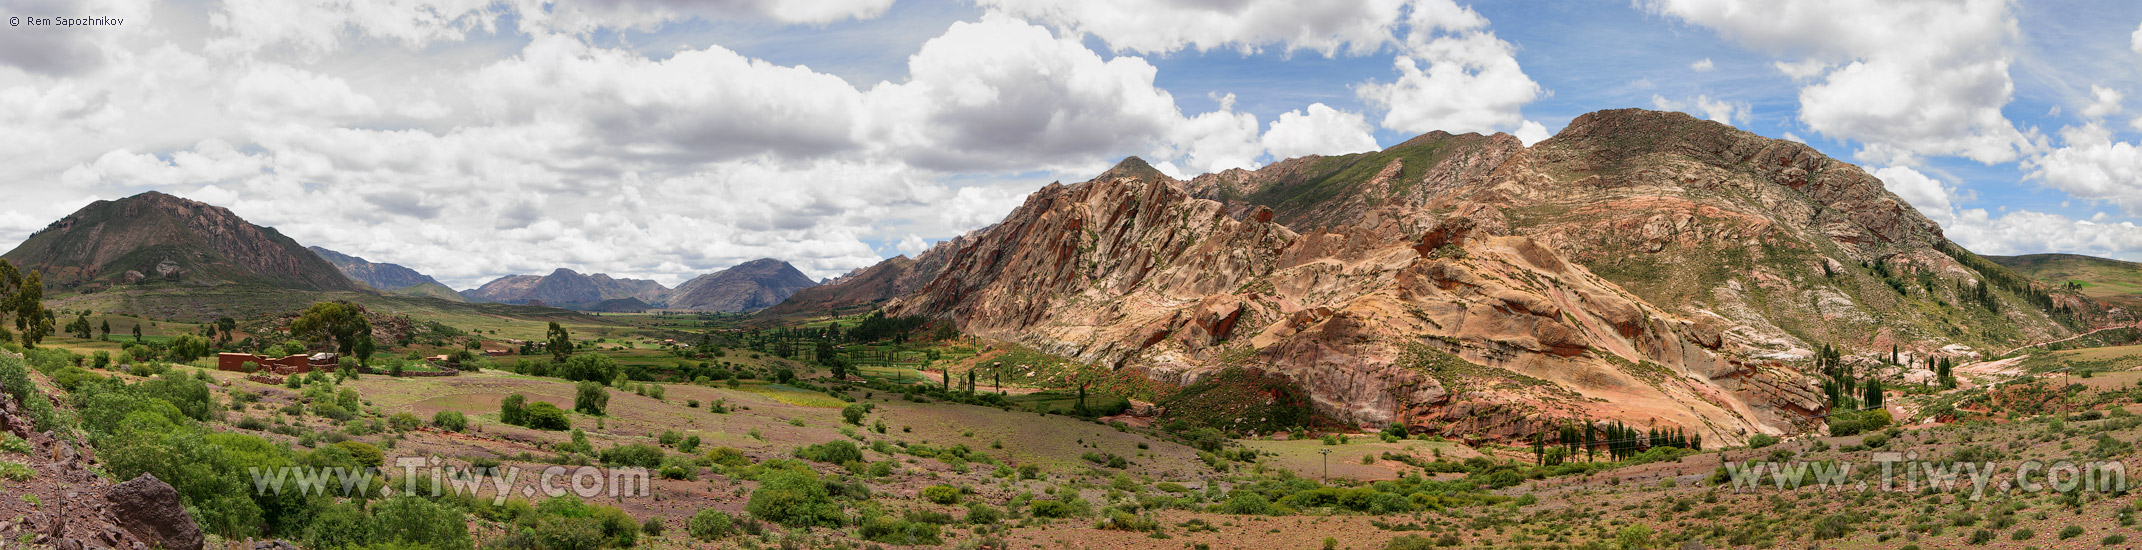 Дорога между Сукре и Потоси - Боливия